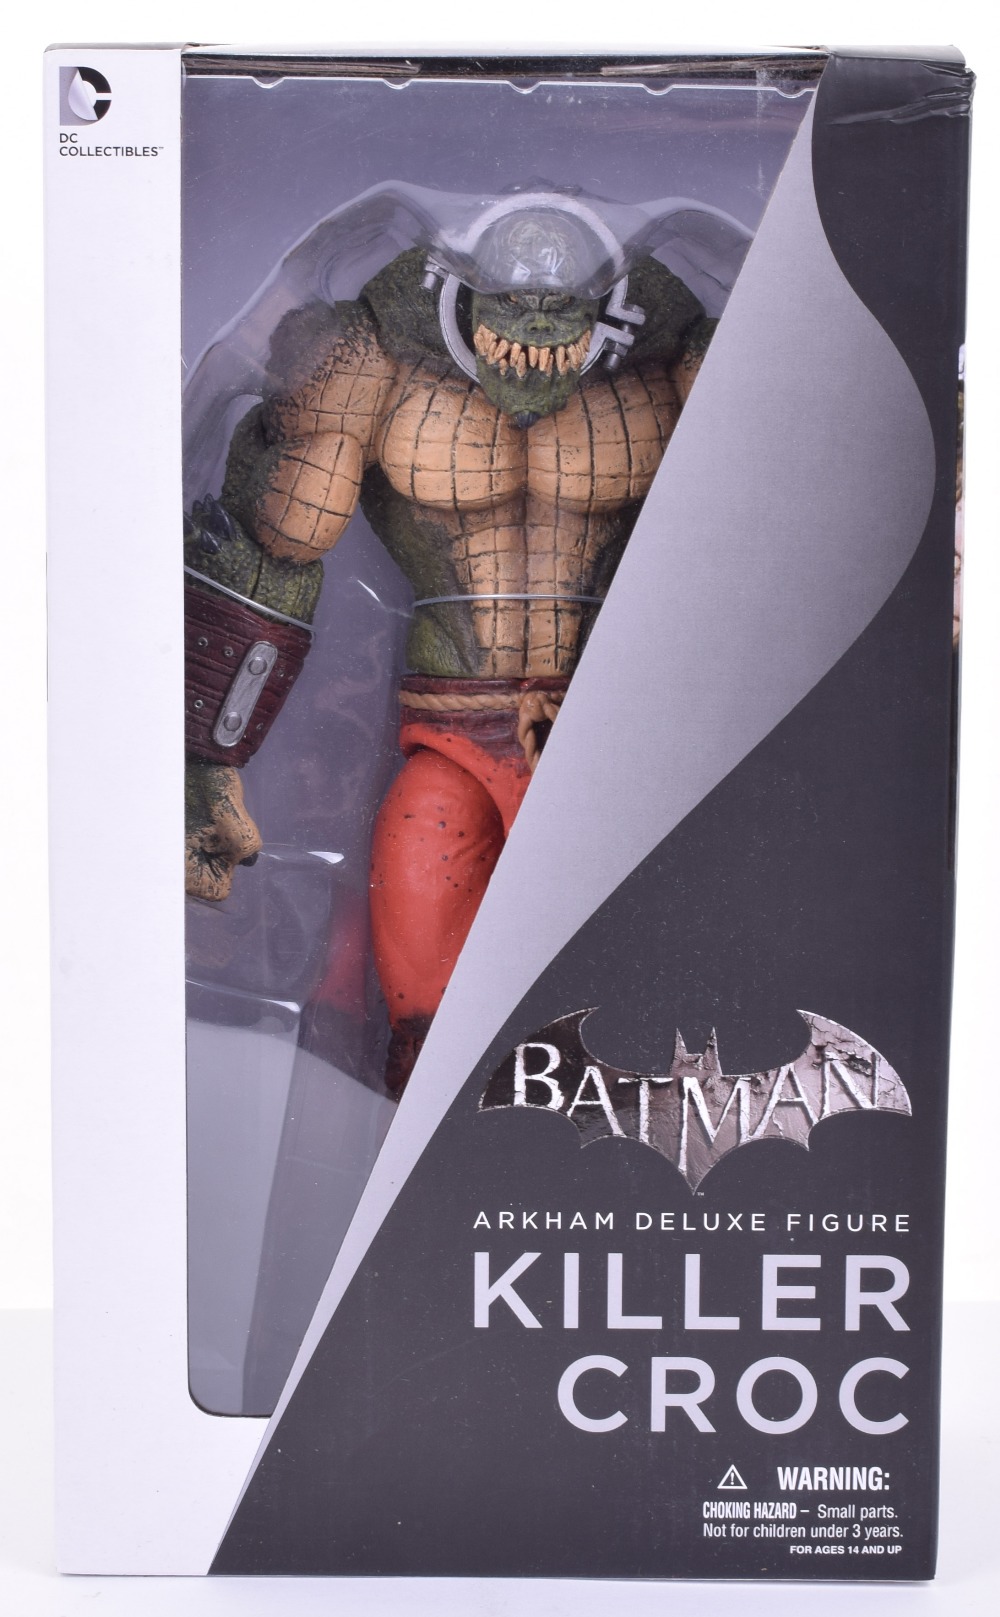 Batman Arkham Deluxe Figure Killer Croc, DC Collectibles, based on blockbuster video games ‘